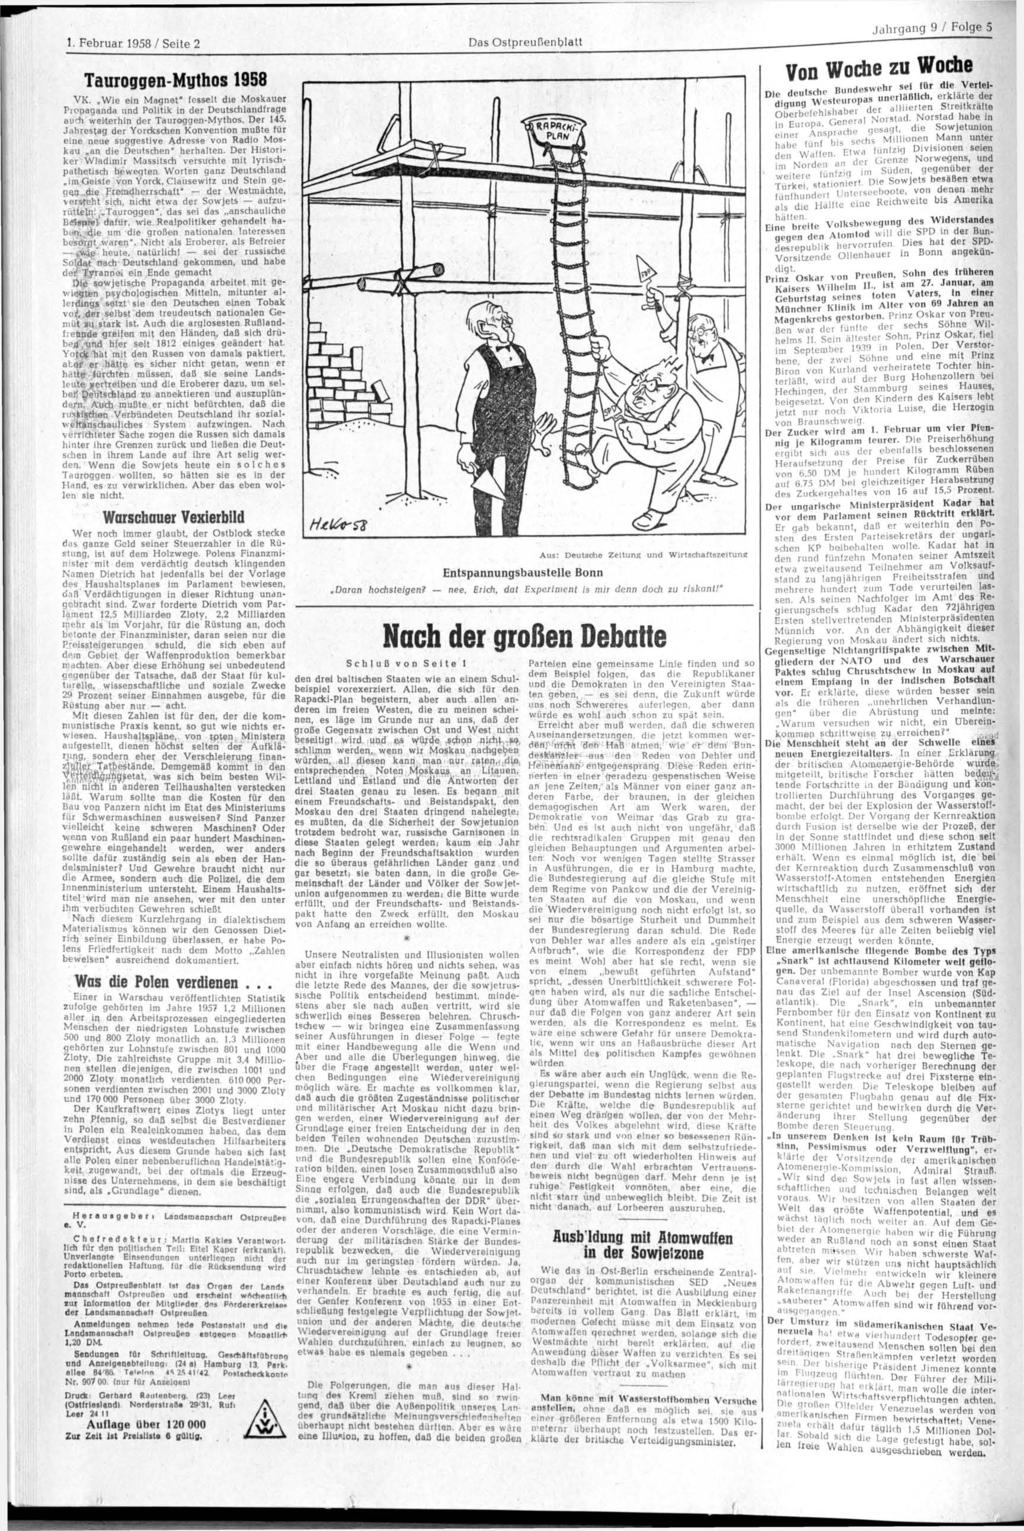 1. Februar 1958 / Seite 2 Das blatt Jahrgang 9 / Folge 5 Tauroggen-Mythos 1958 VK.